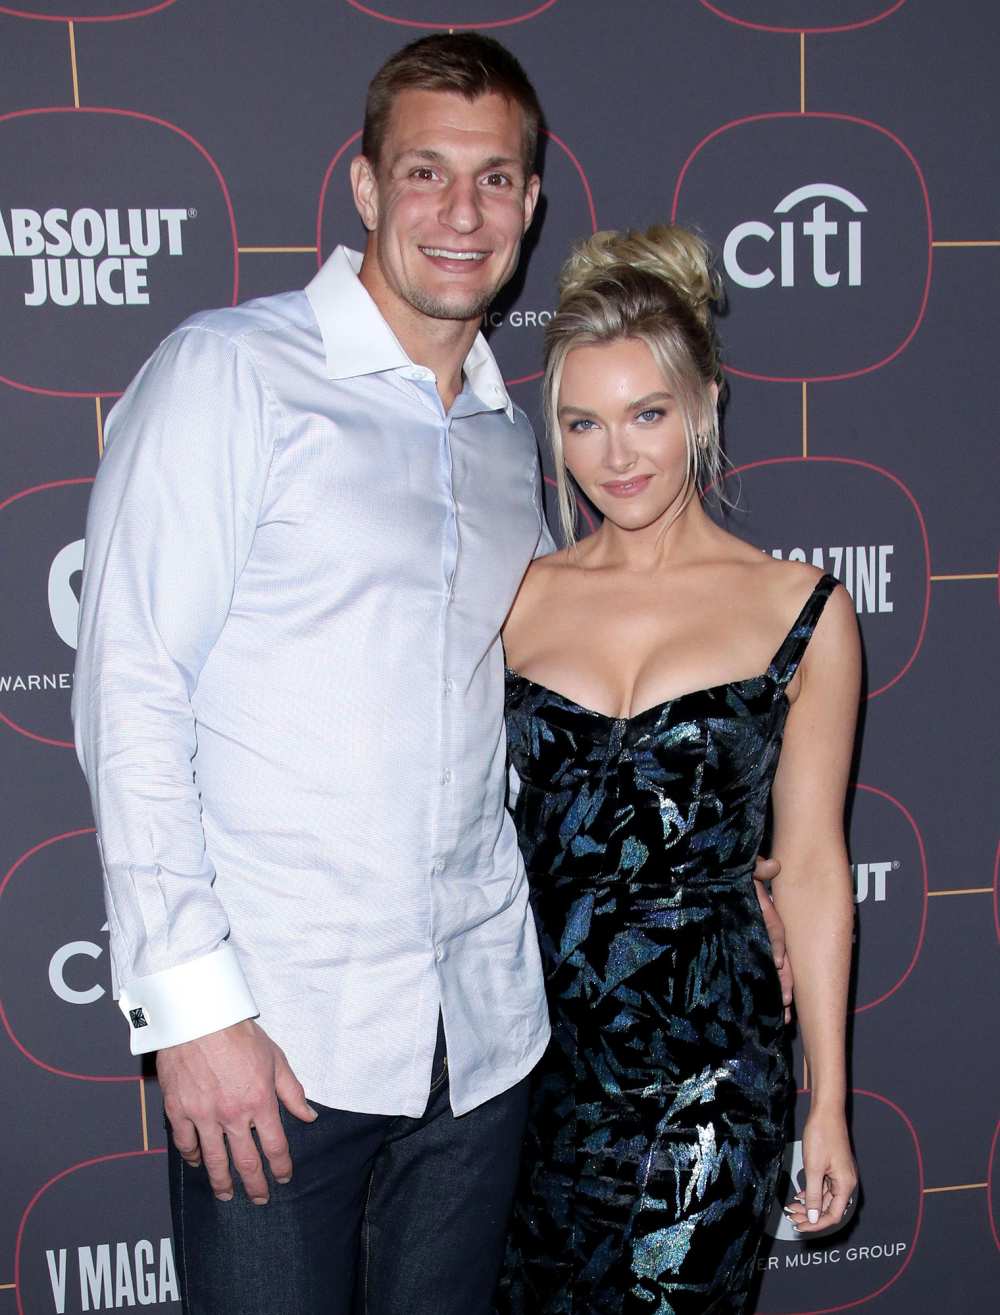 Rob Gronkowski Celebrates Super Bowl Win With Kiss From Girlfriend Camille Kostek